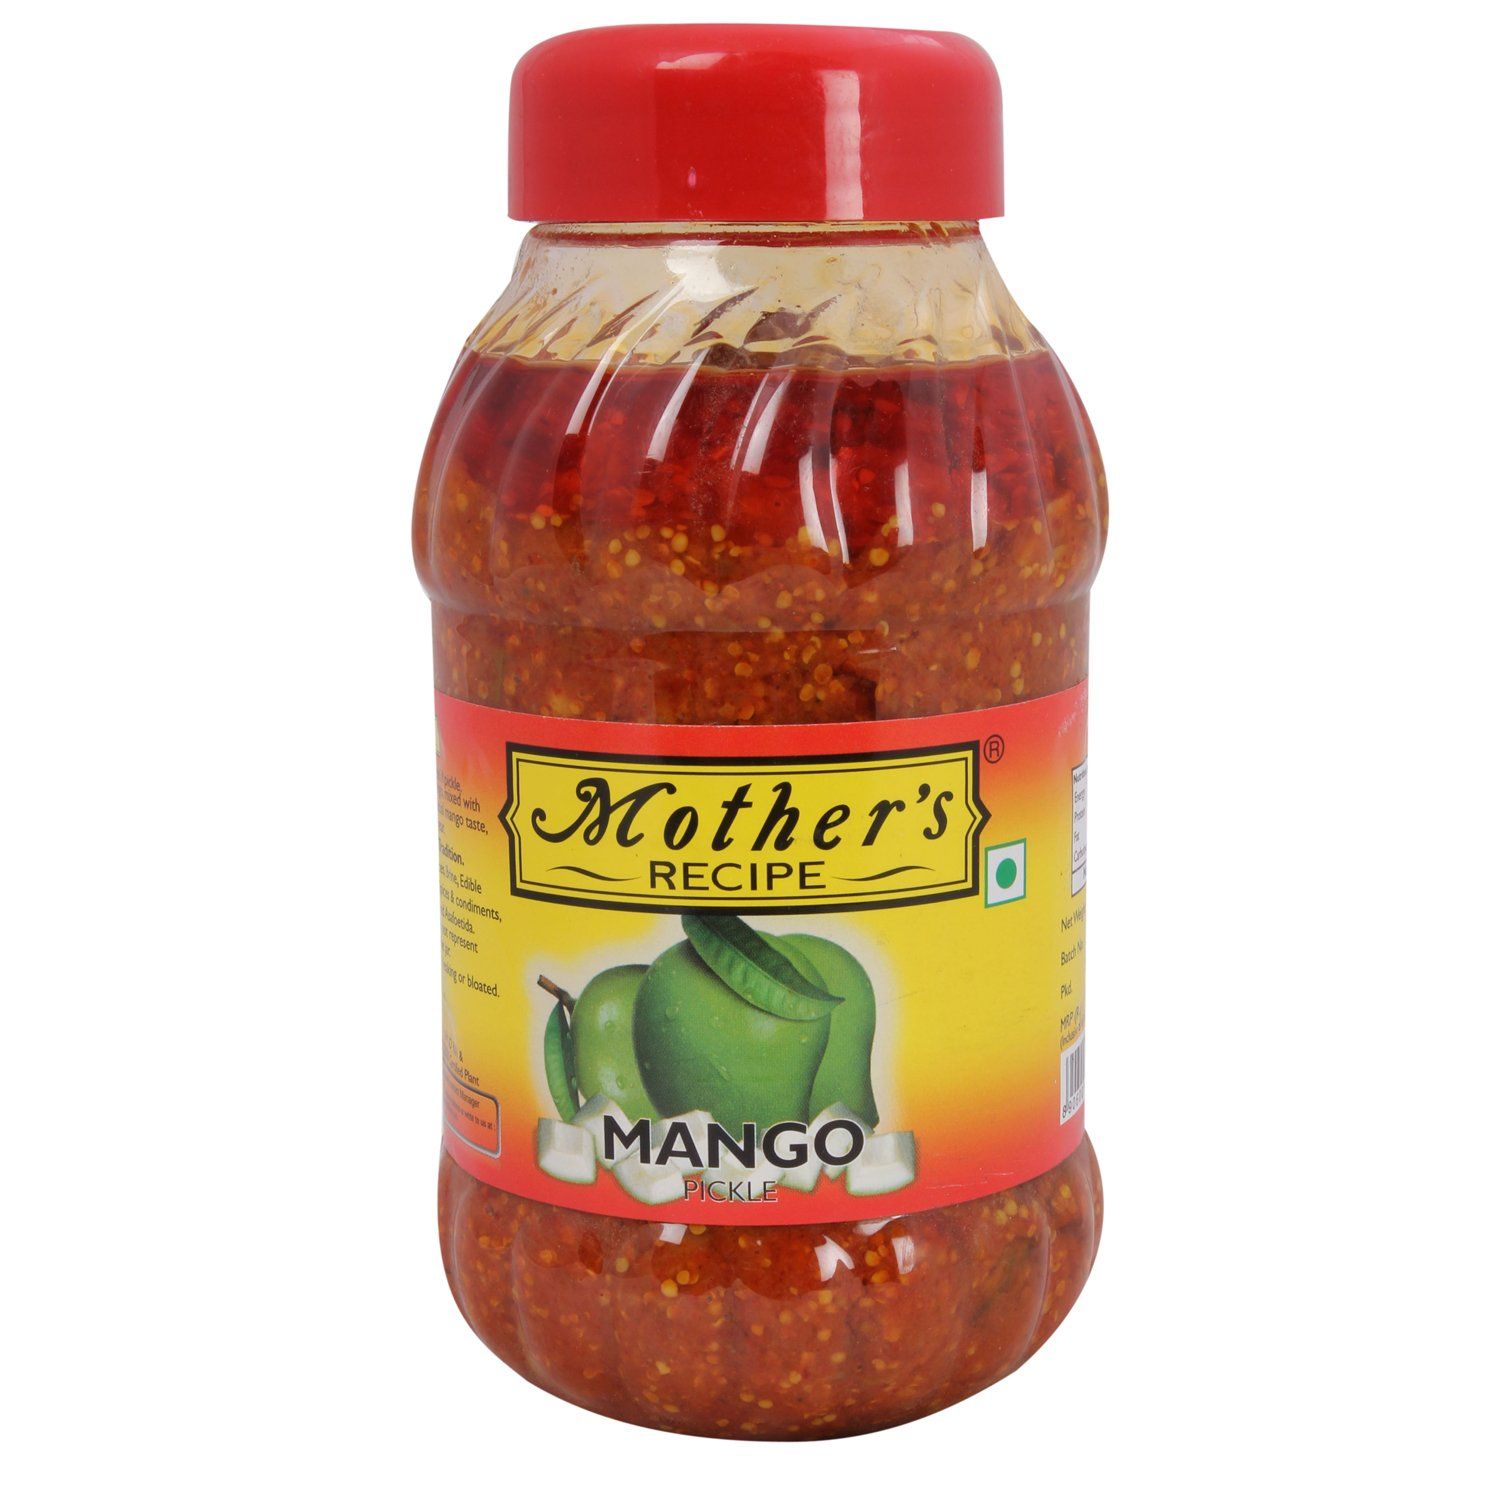 Mothers Recipe Pickle Mango Image